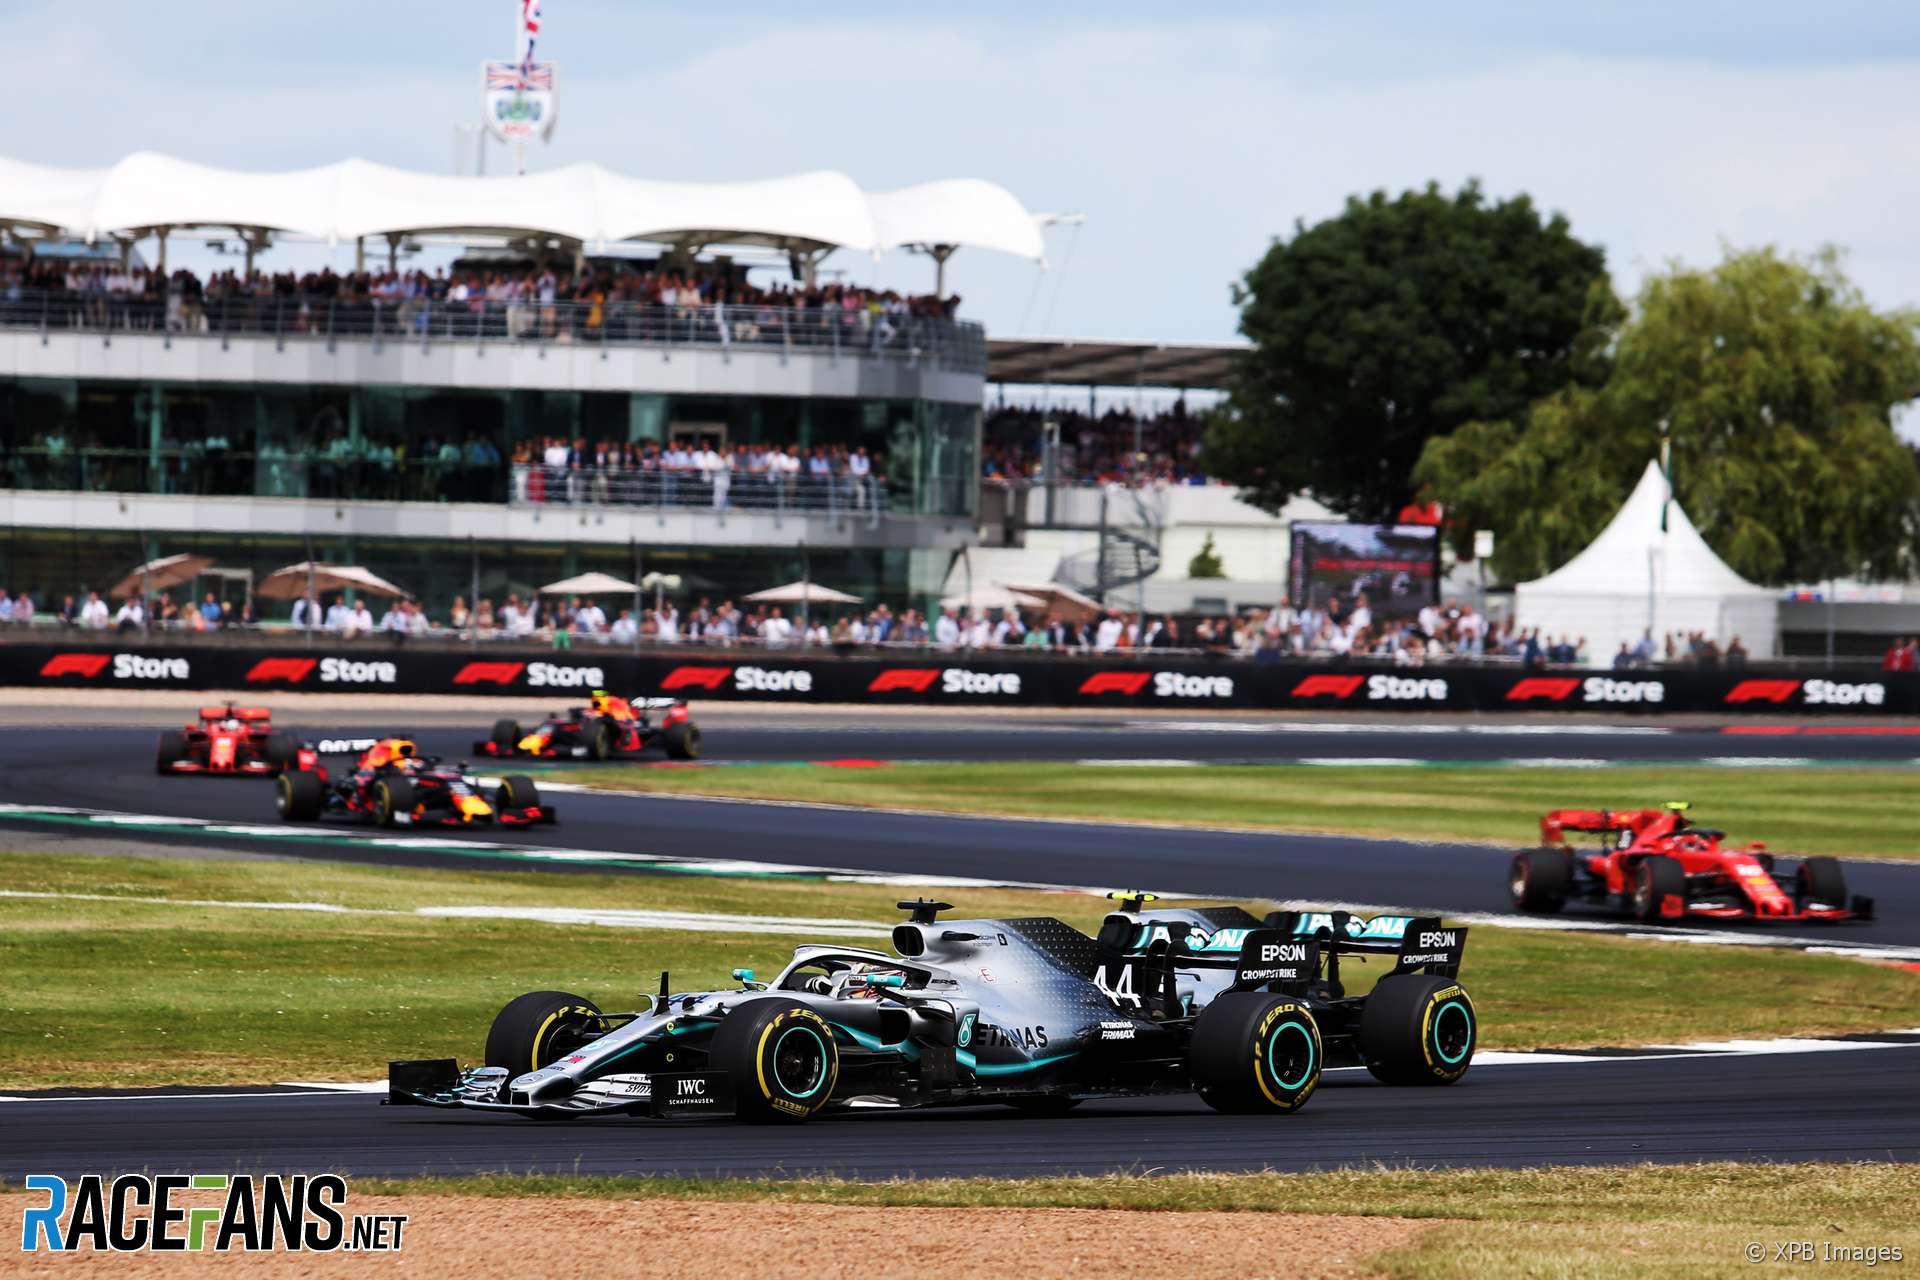 Lewis Hamilton, Valtteri Bottas, Mercedes, Silverstone, 2019